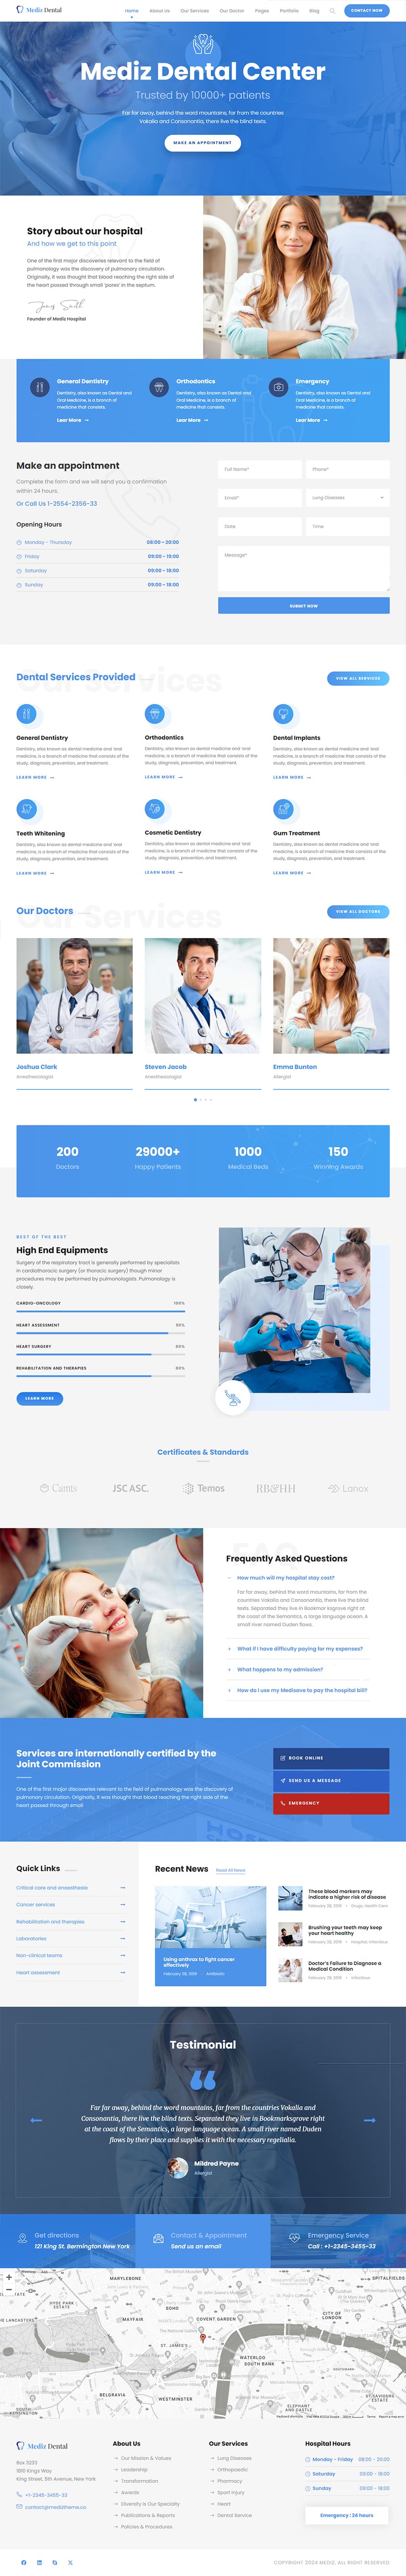 Mediz – Medical WordPress